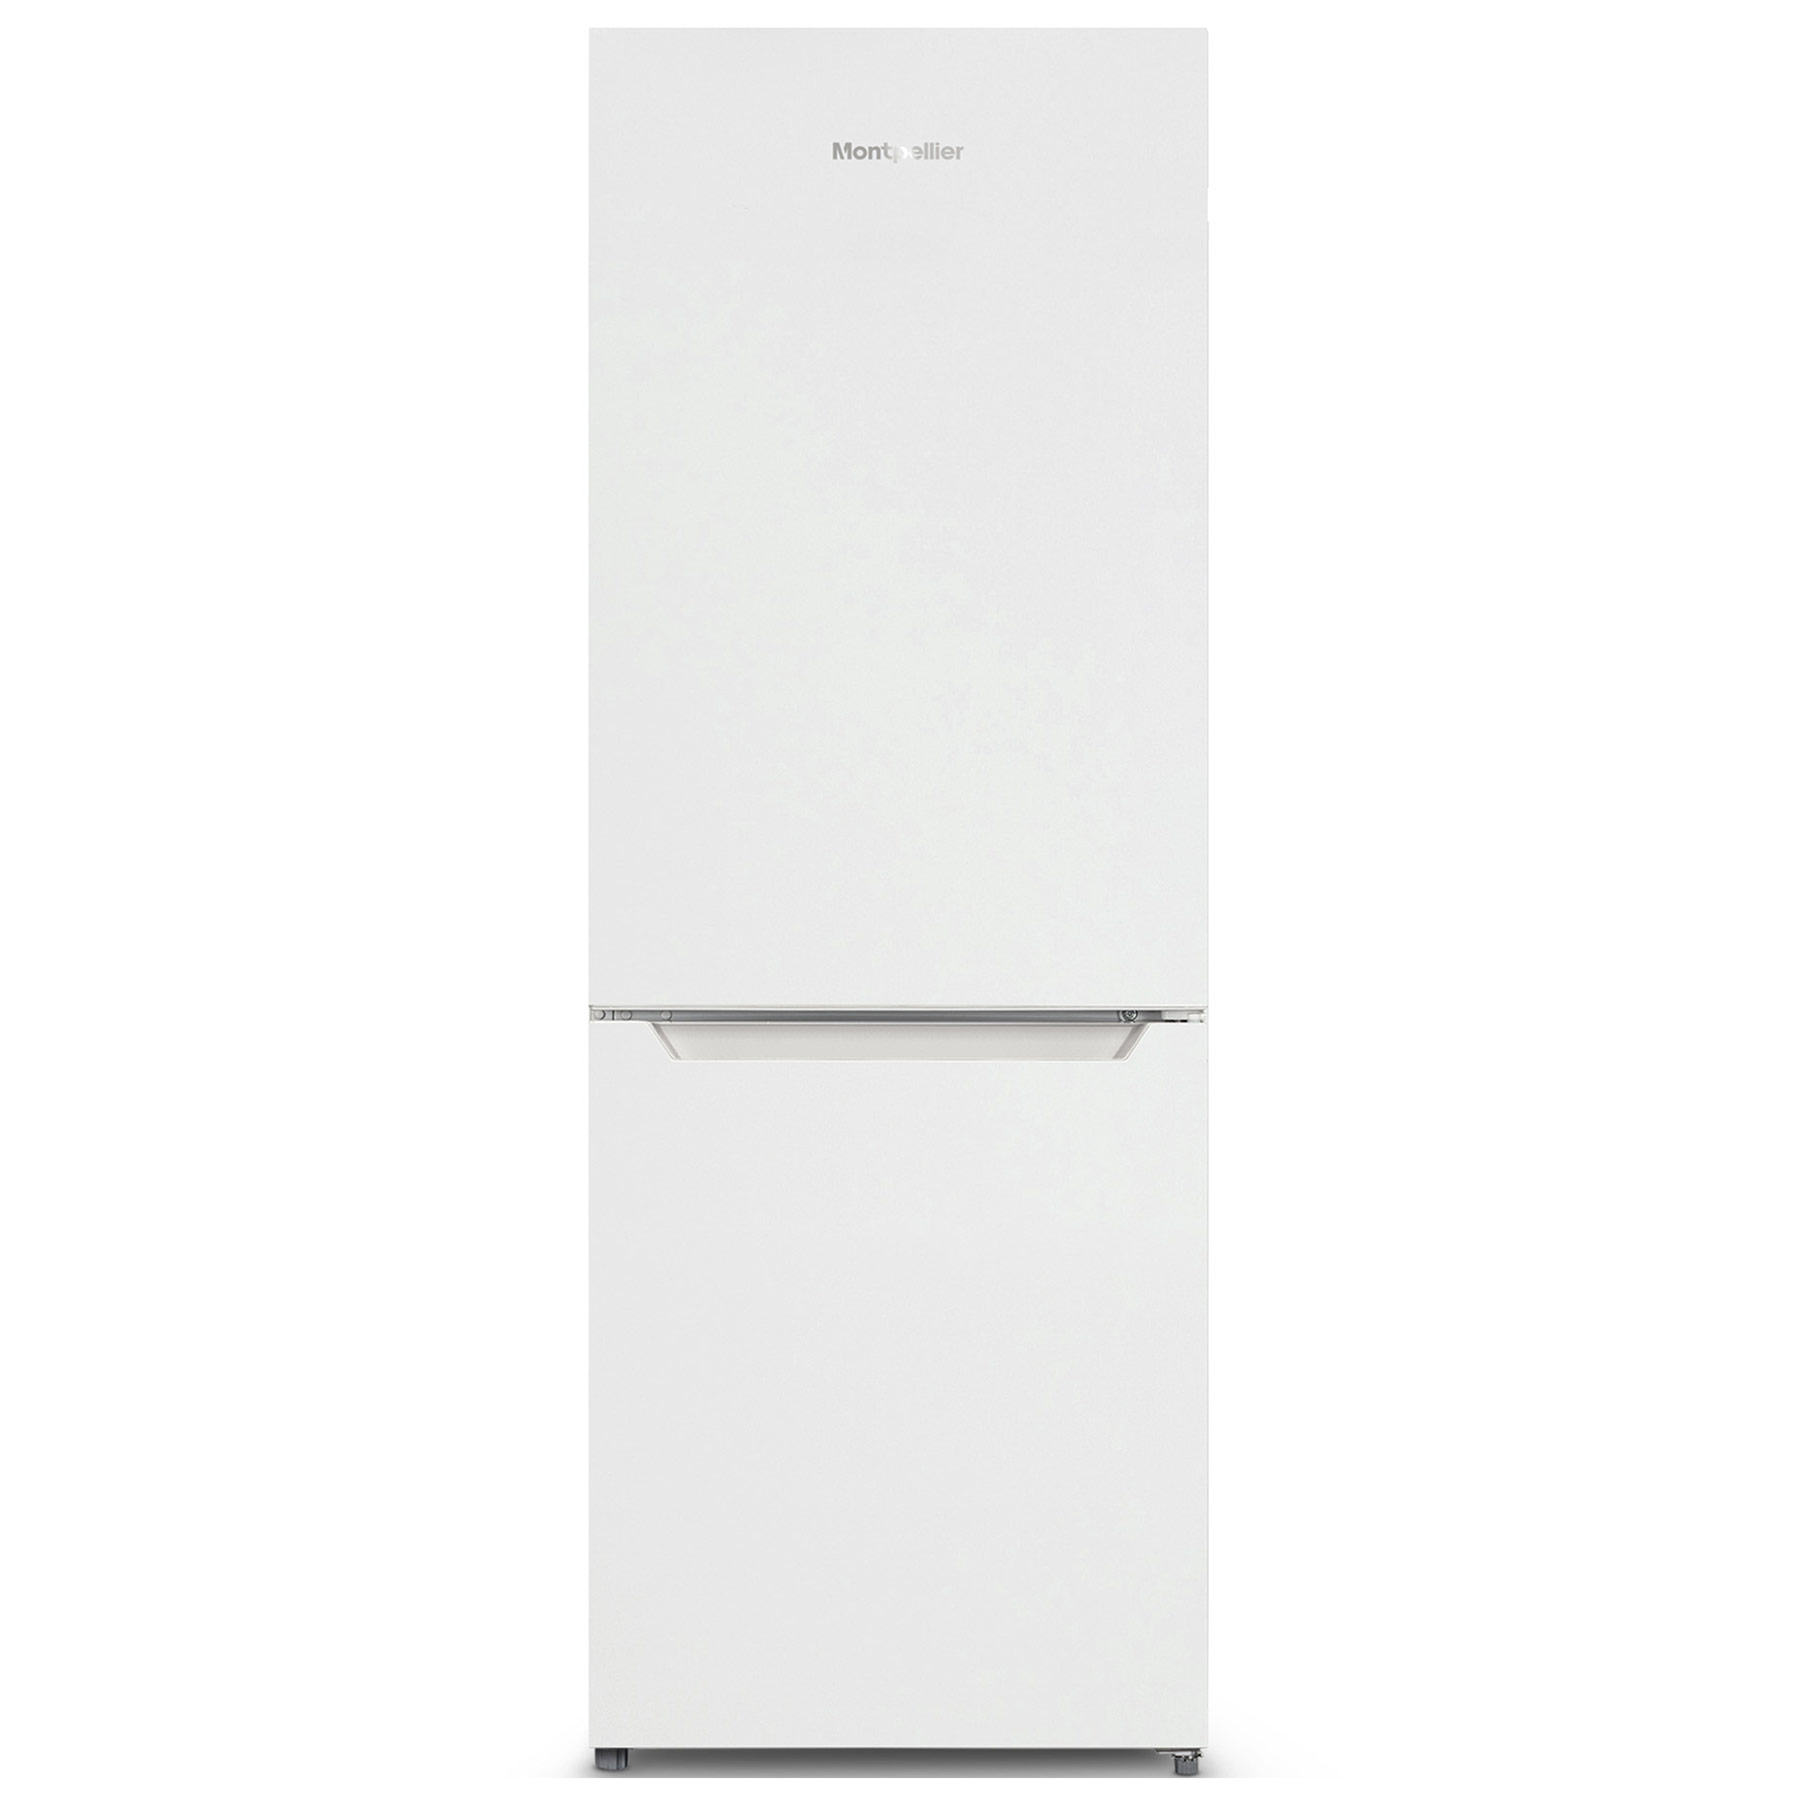 Montpellier MLF150EW 47cm Low Frost Fridge Freezer in White 1 50m E Ra